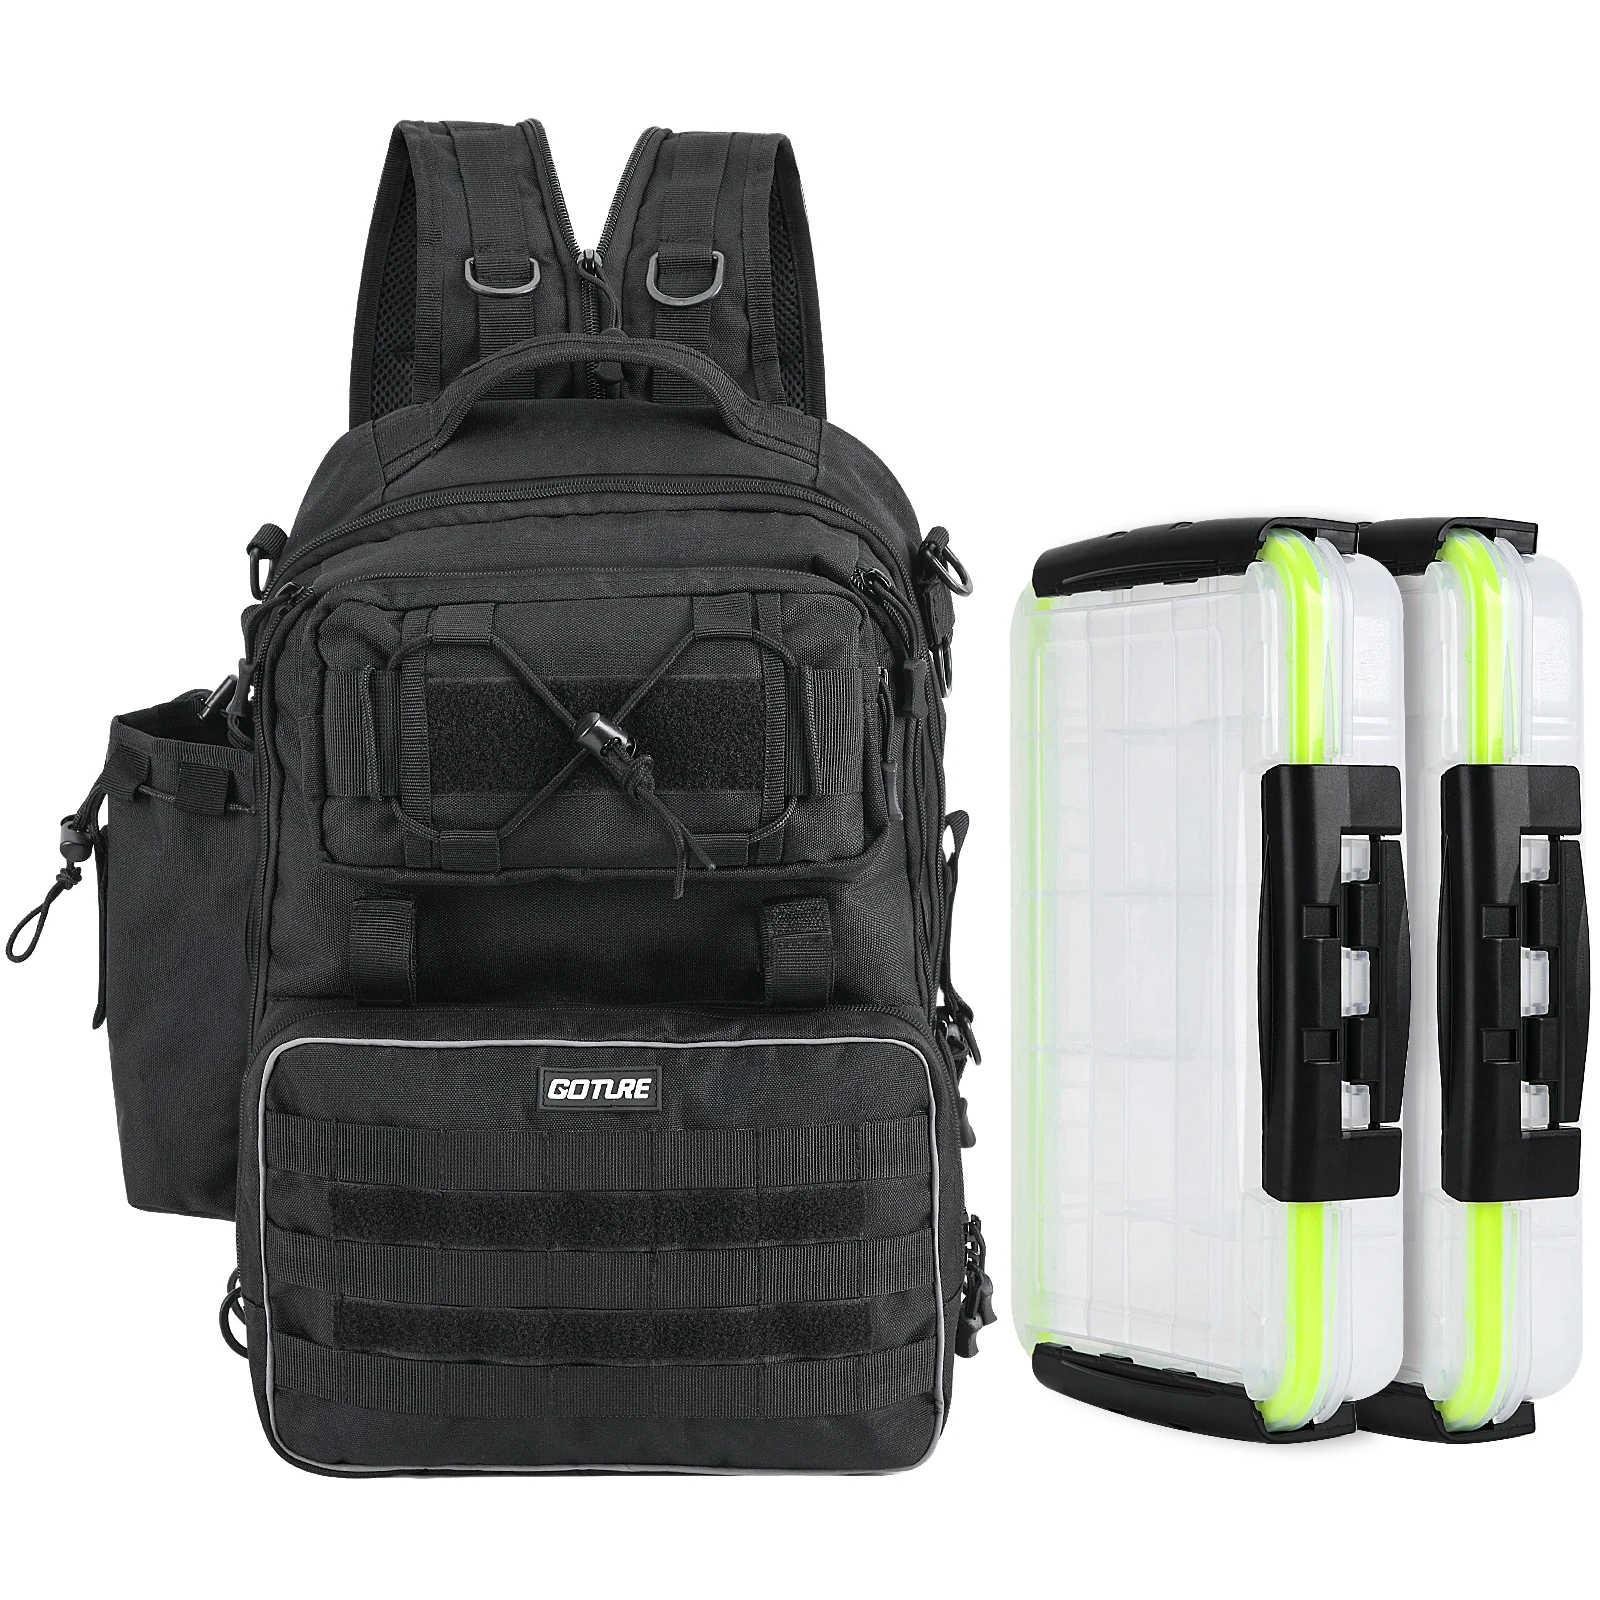 Goture Fishing Tackle Backpack 600D Nylon Waterproof Backpack